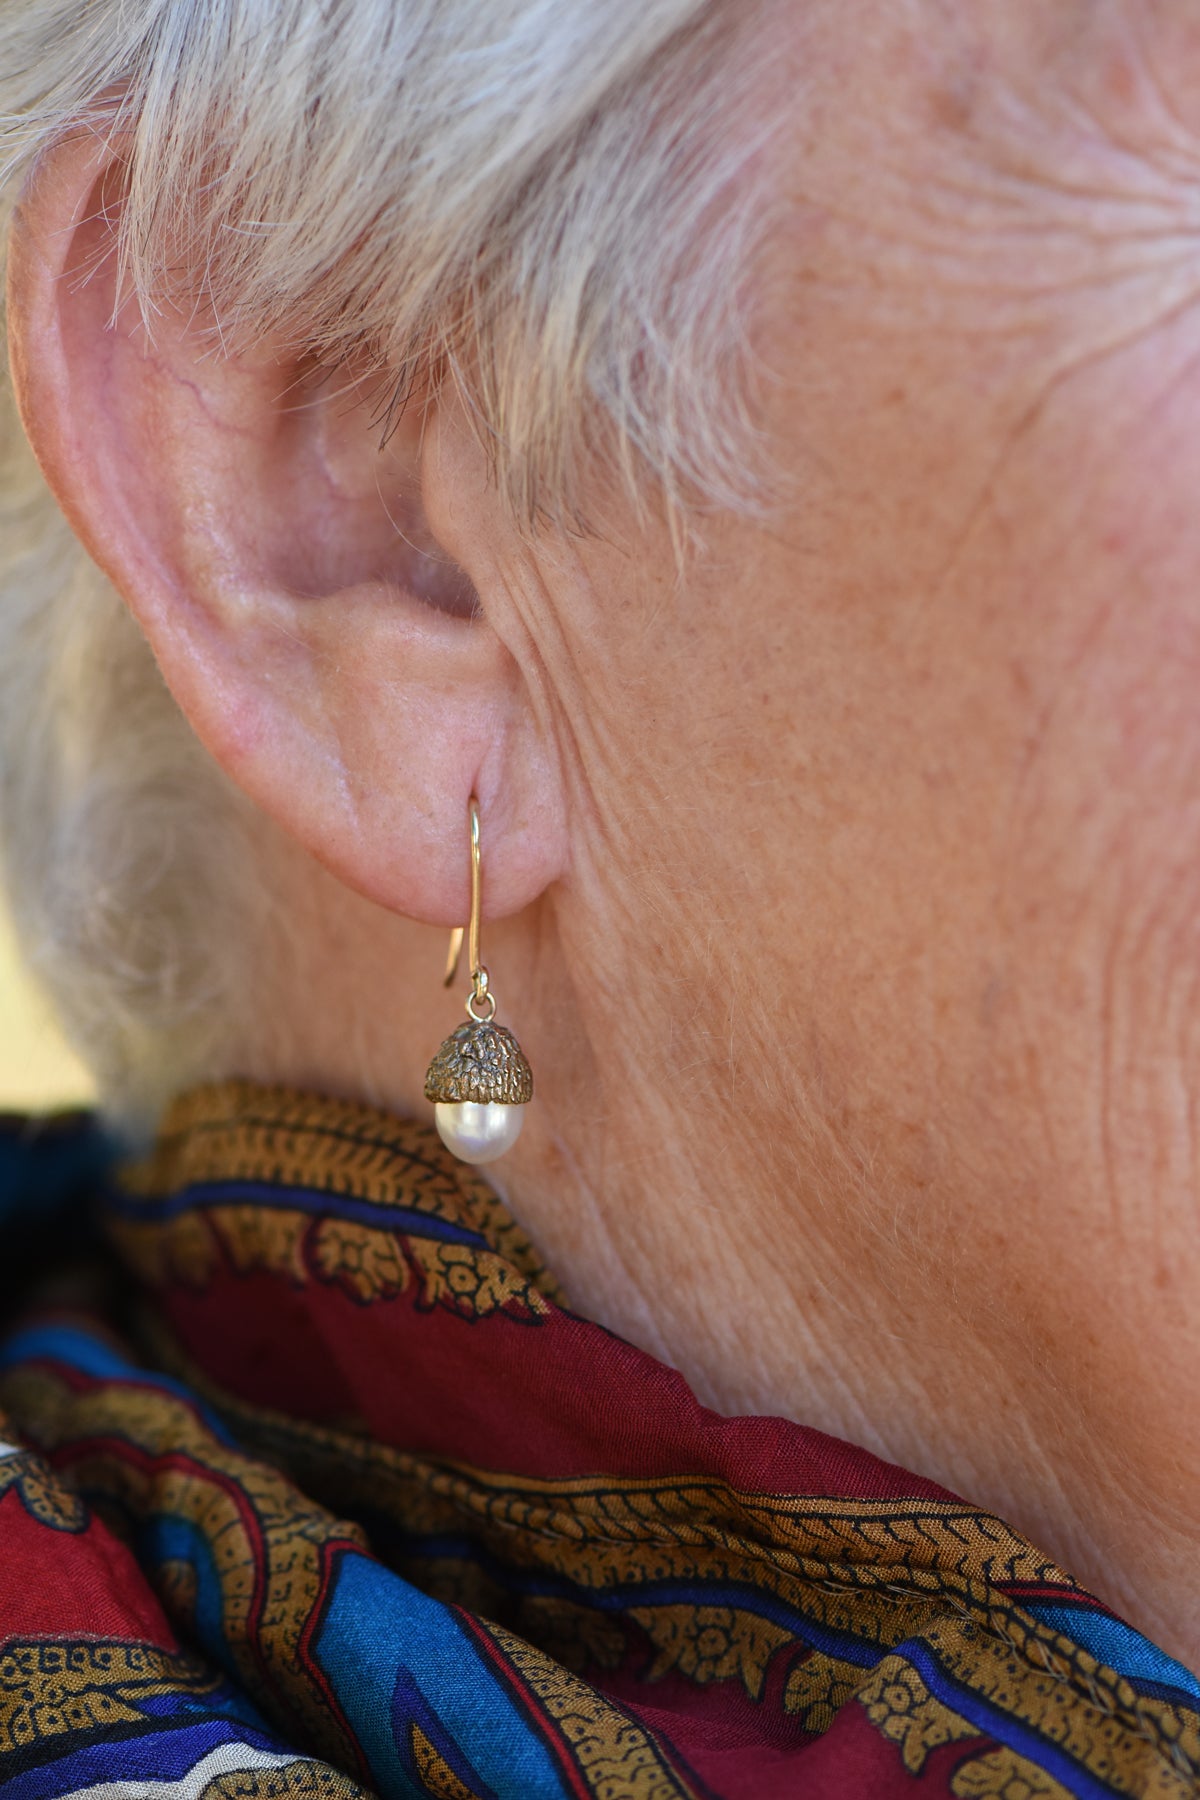 Bronze Acorn Pearl Drop Earrings